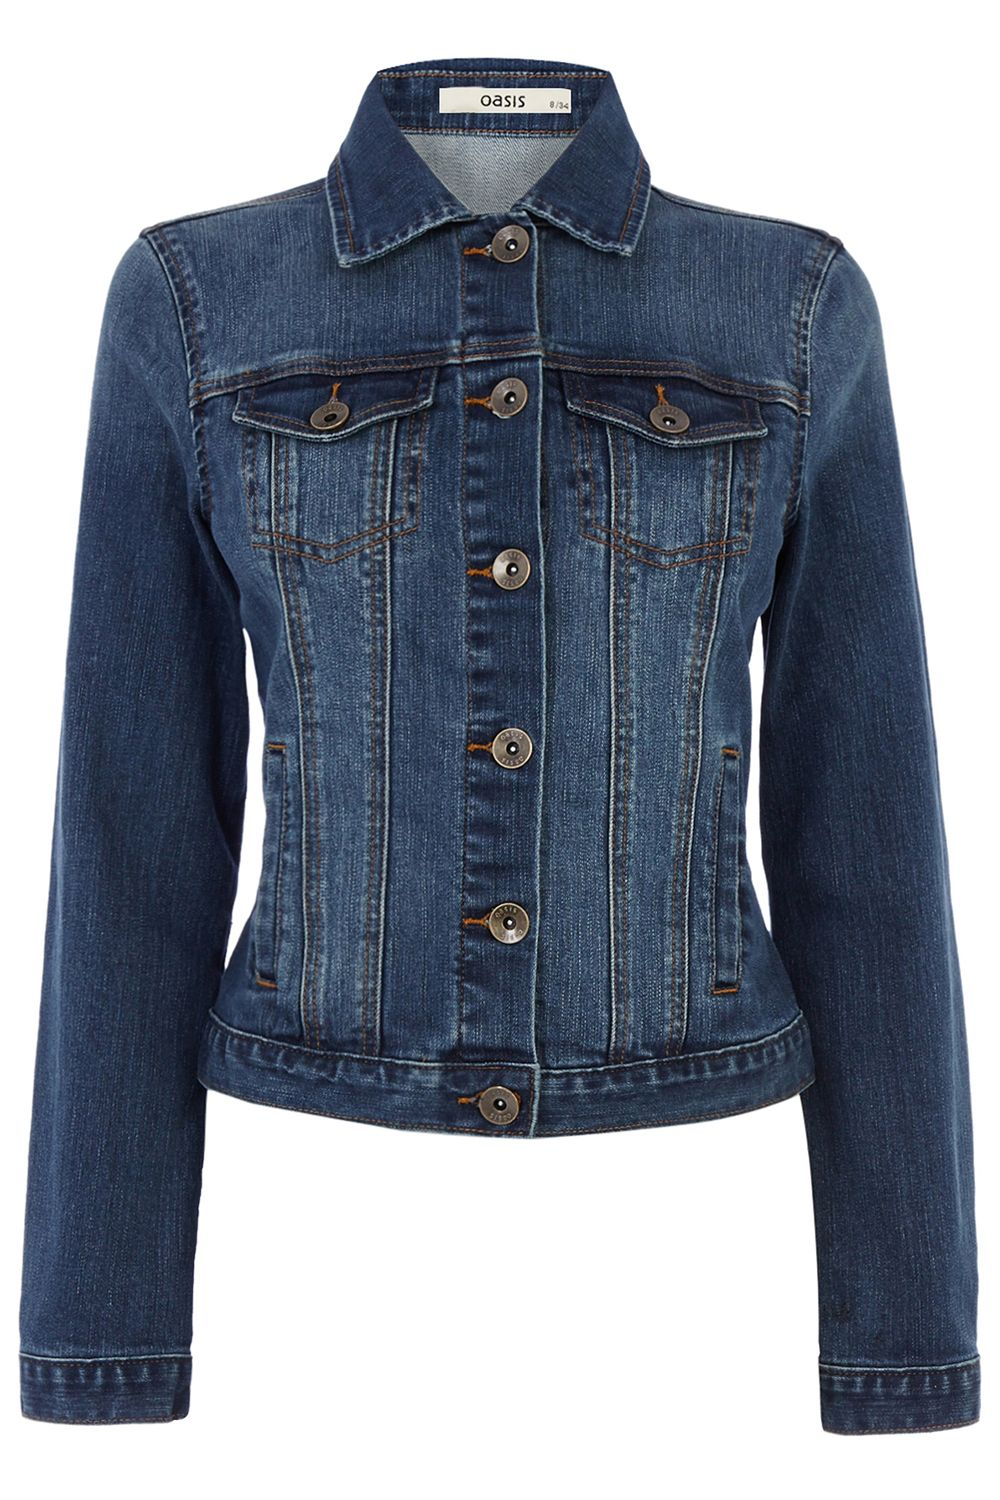 Oasis Marley Denim Jacket in Blue (Denim) | Lyst